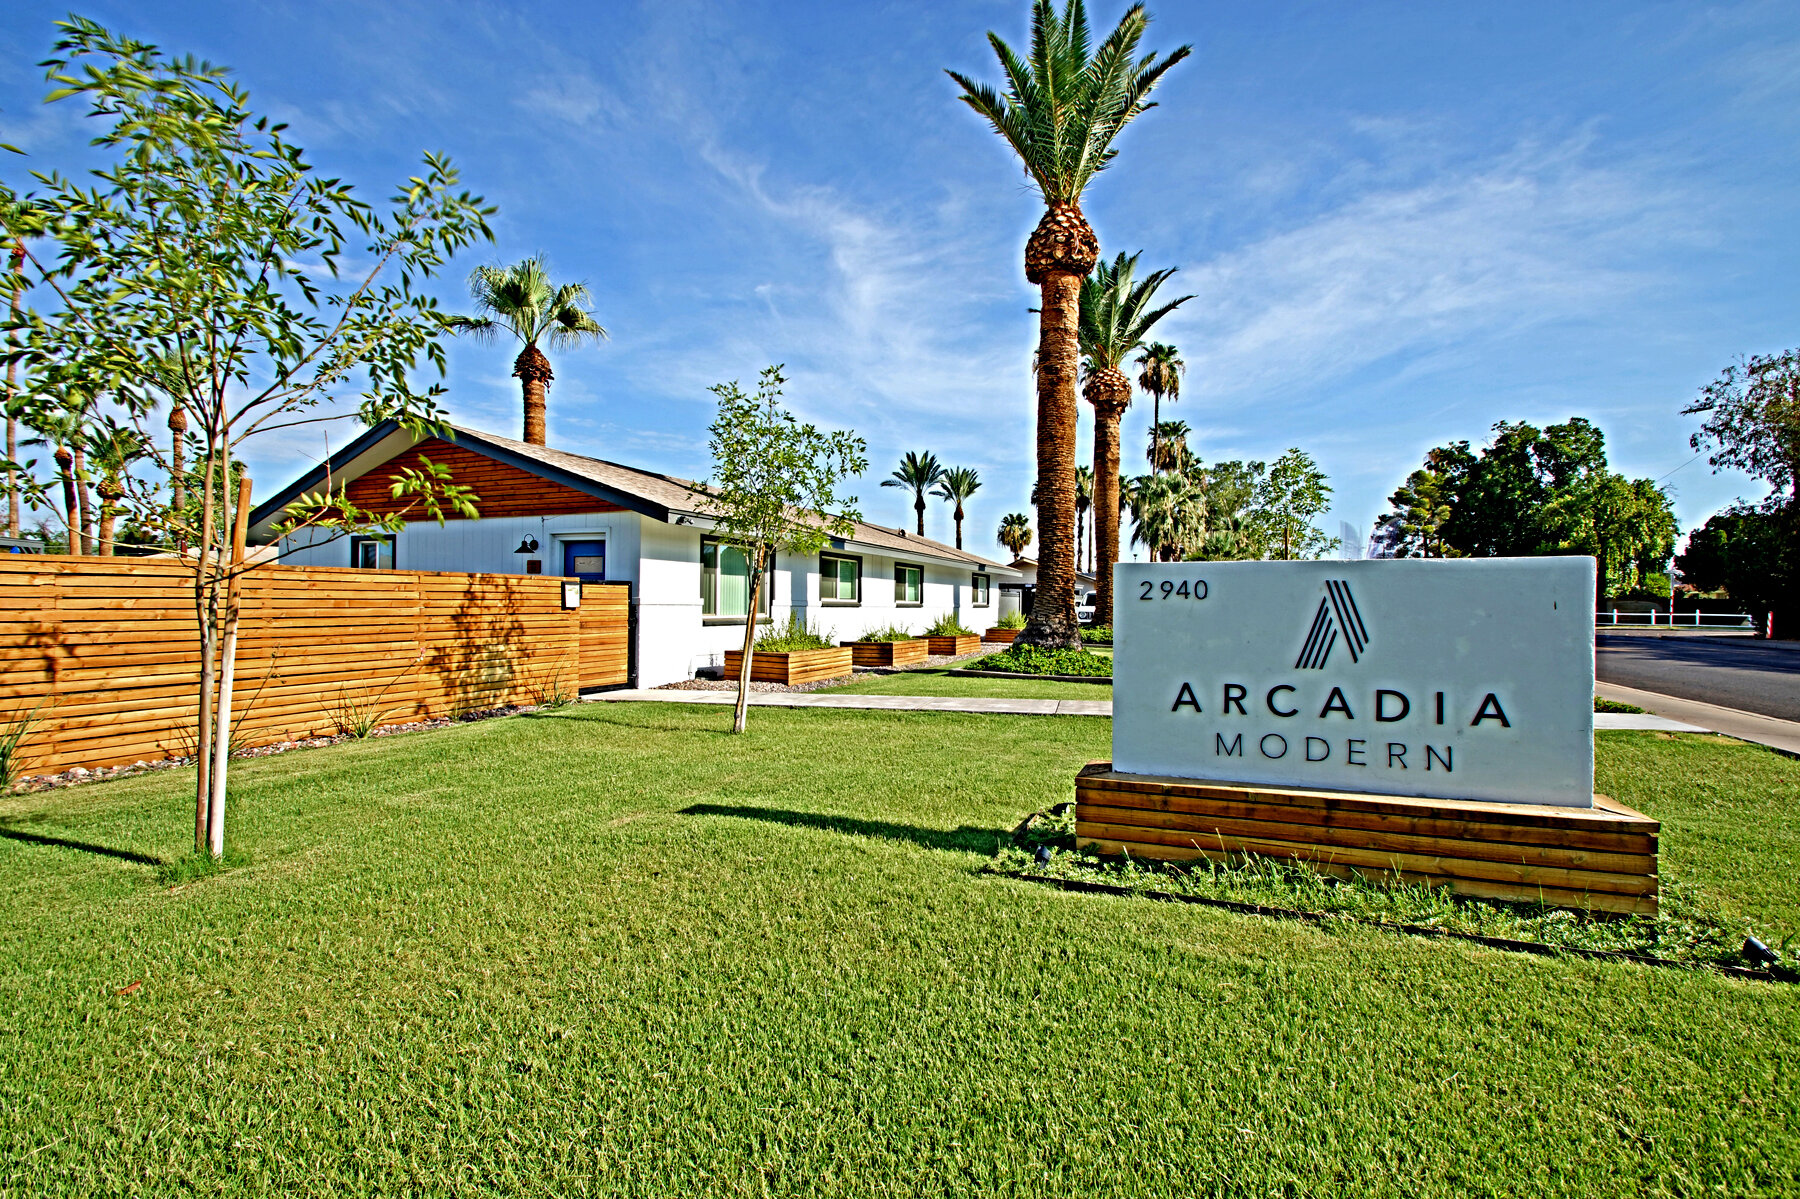 Arcadia Modern